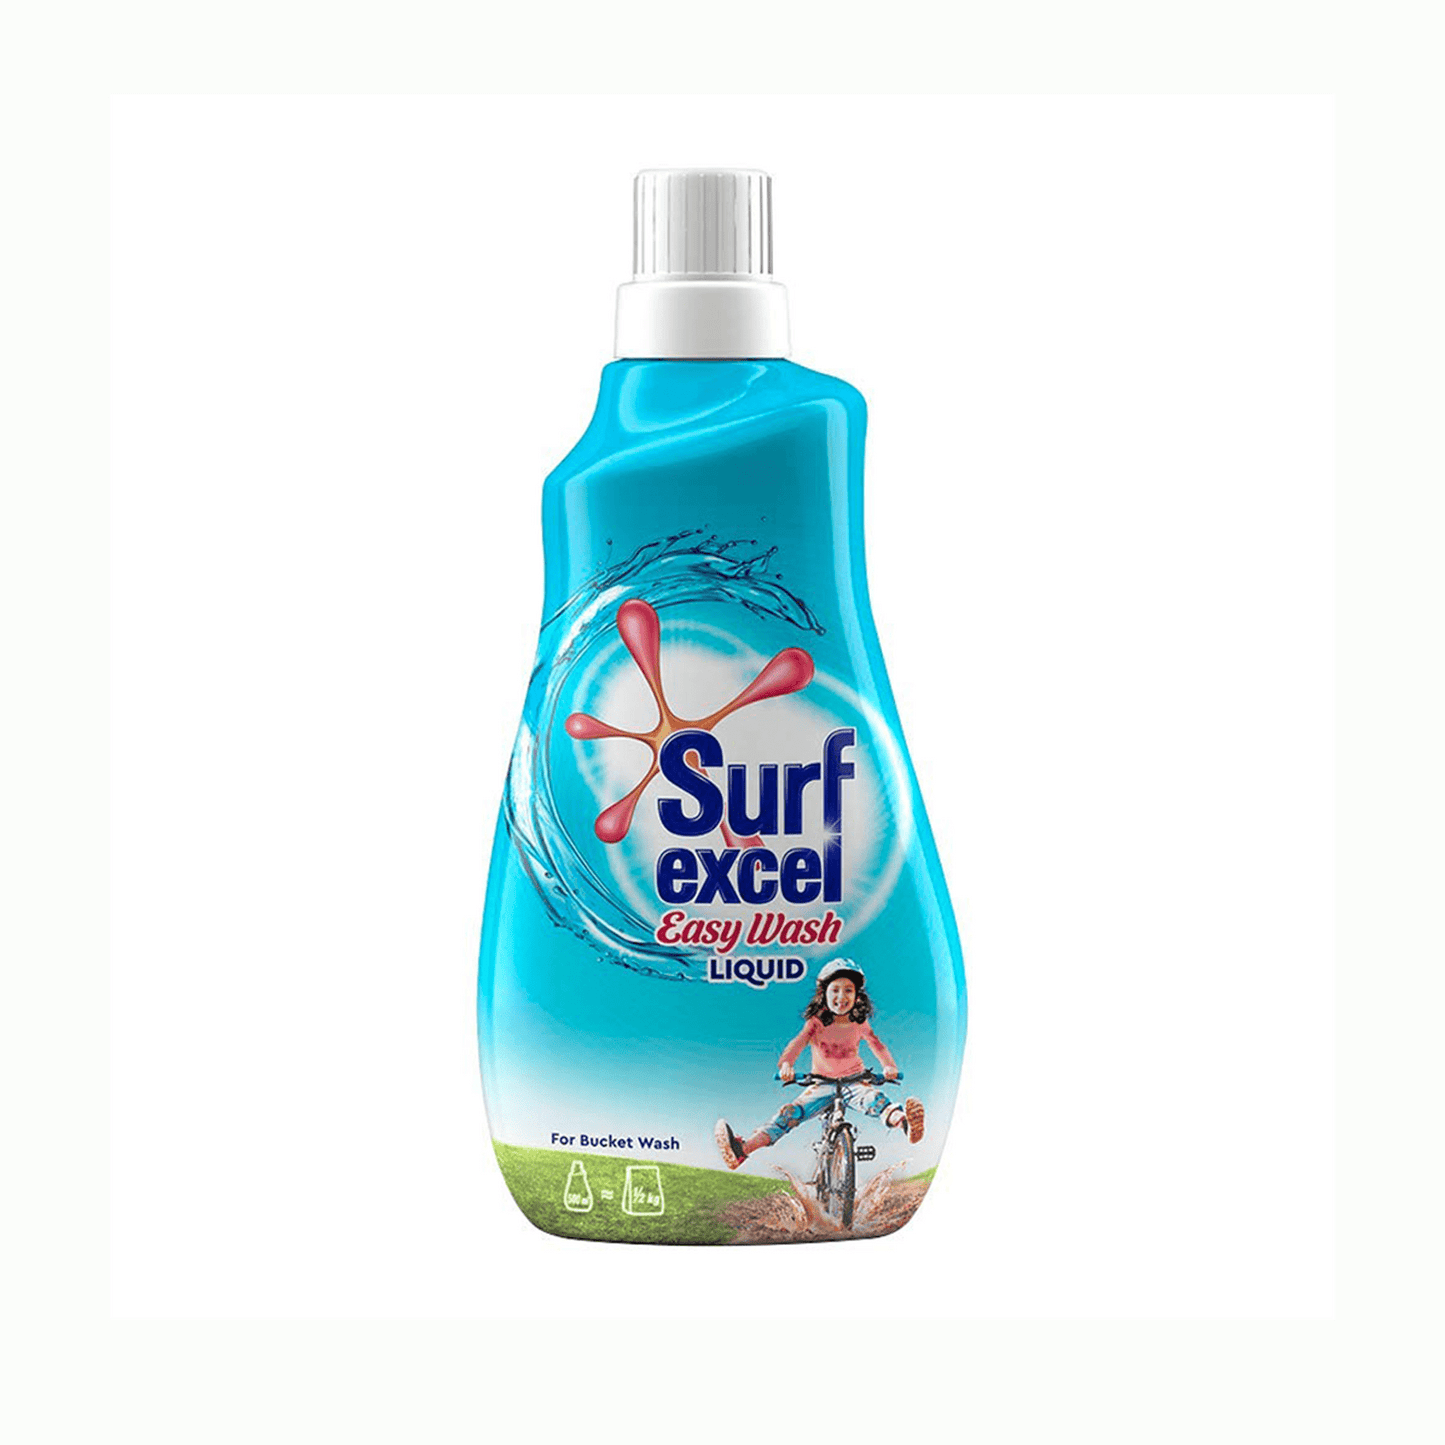 Surfexcel Easy Wash Liquid.